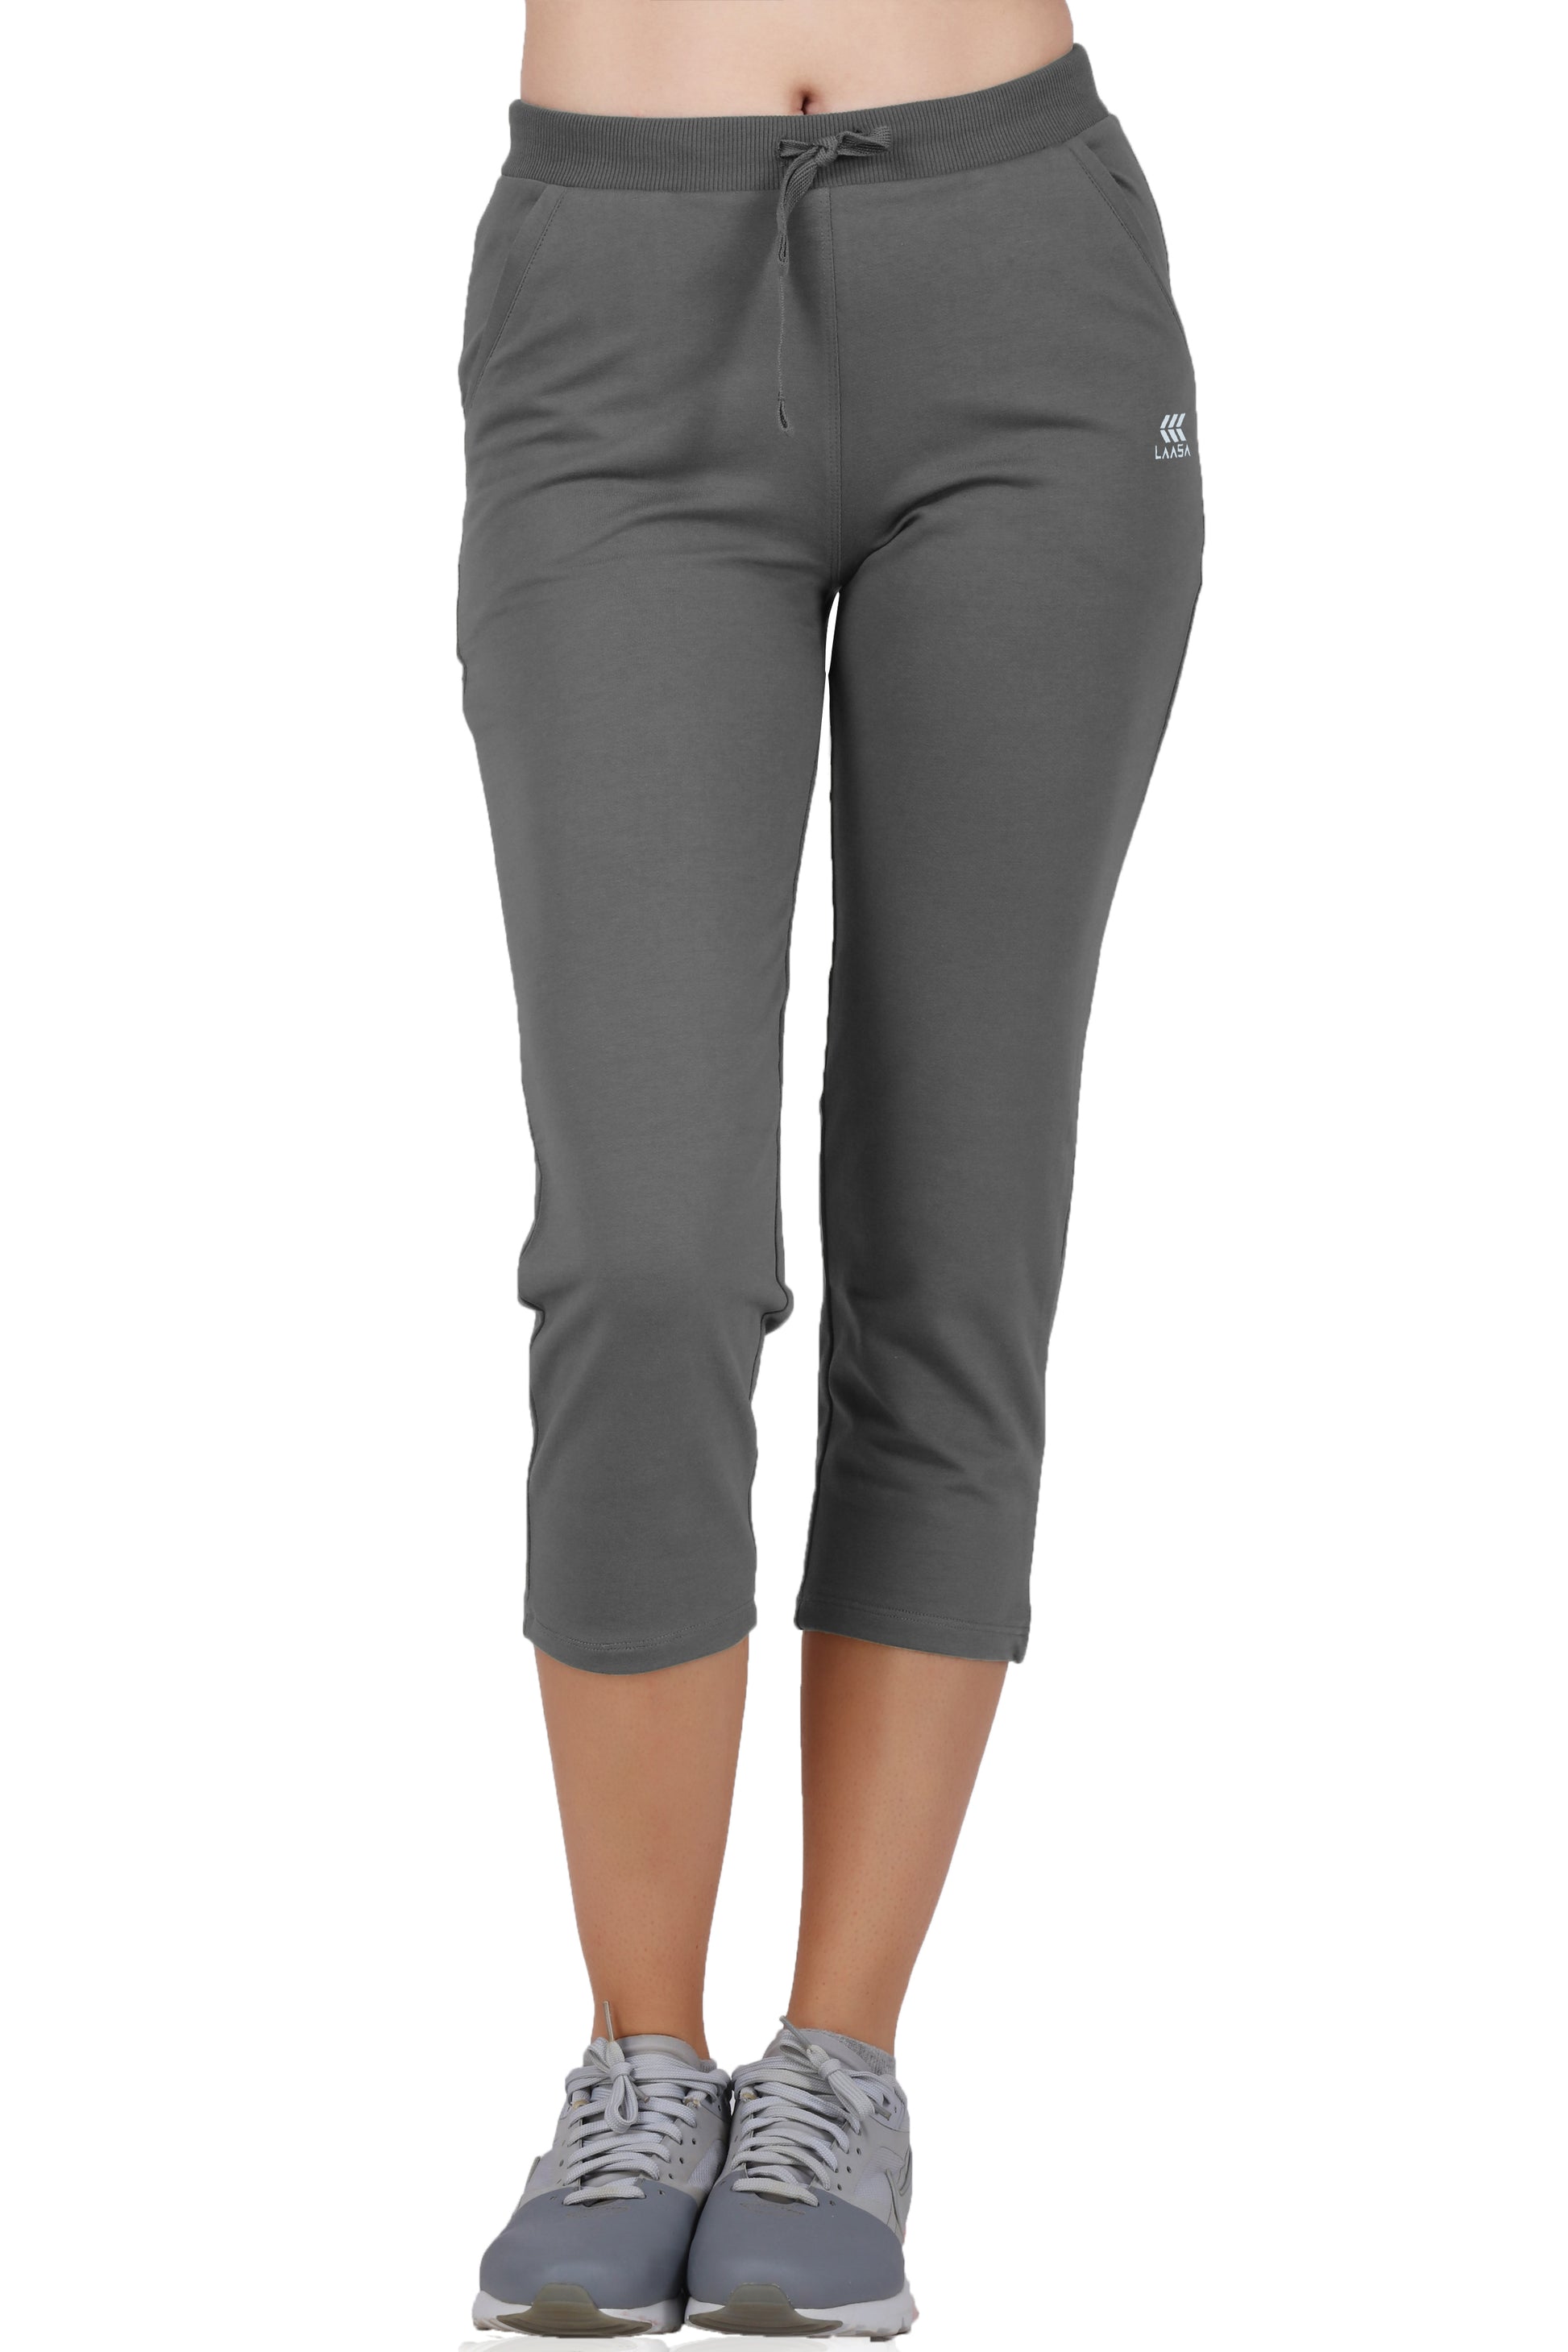 NWT New Directions Capri Pants Women's Size 6 Gray Mid Rise Cotton Blend